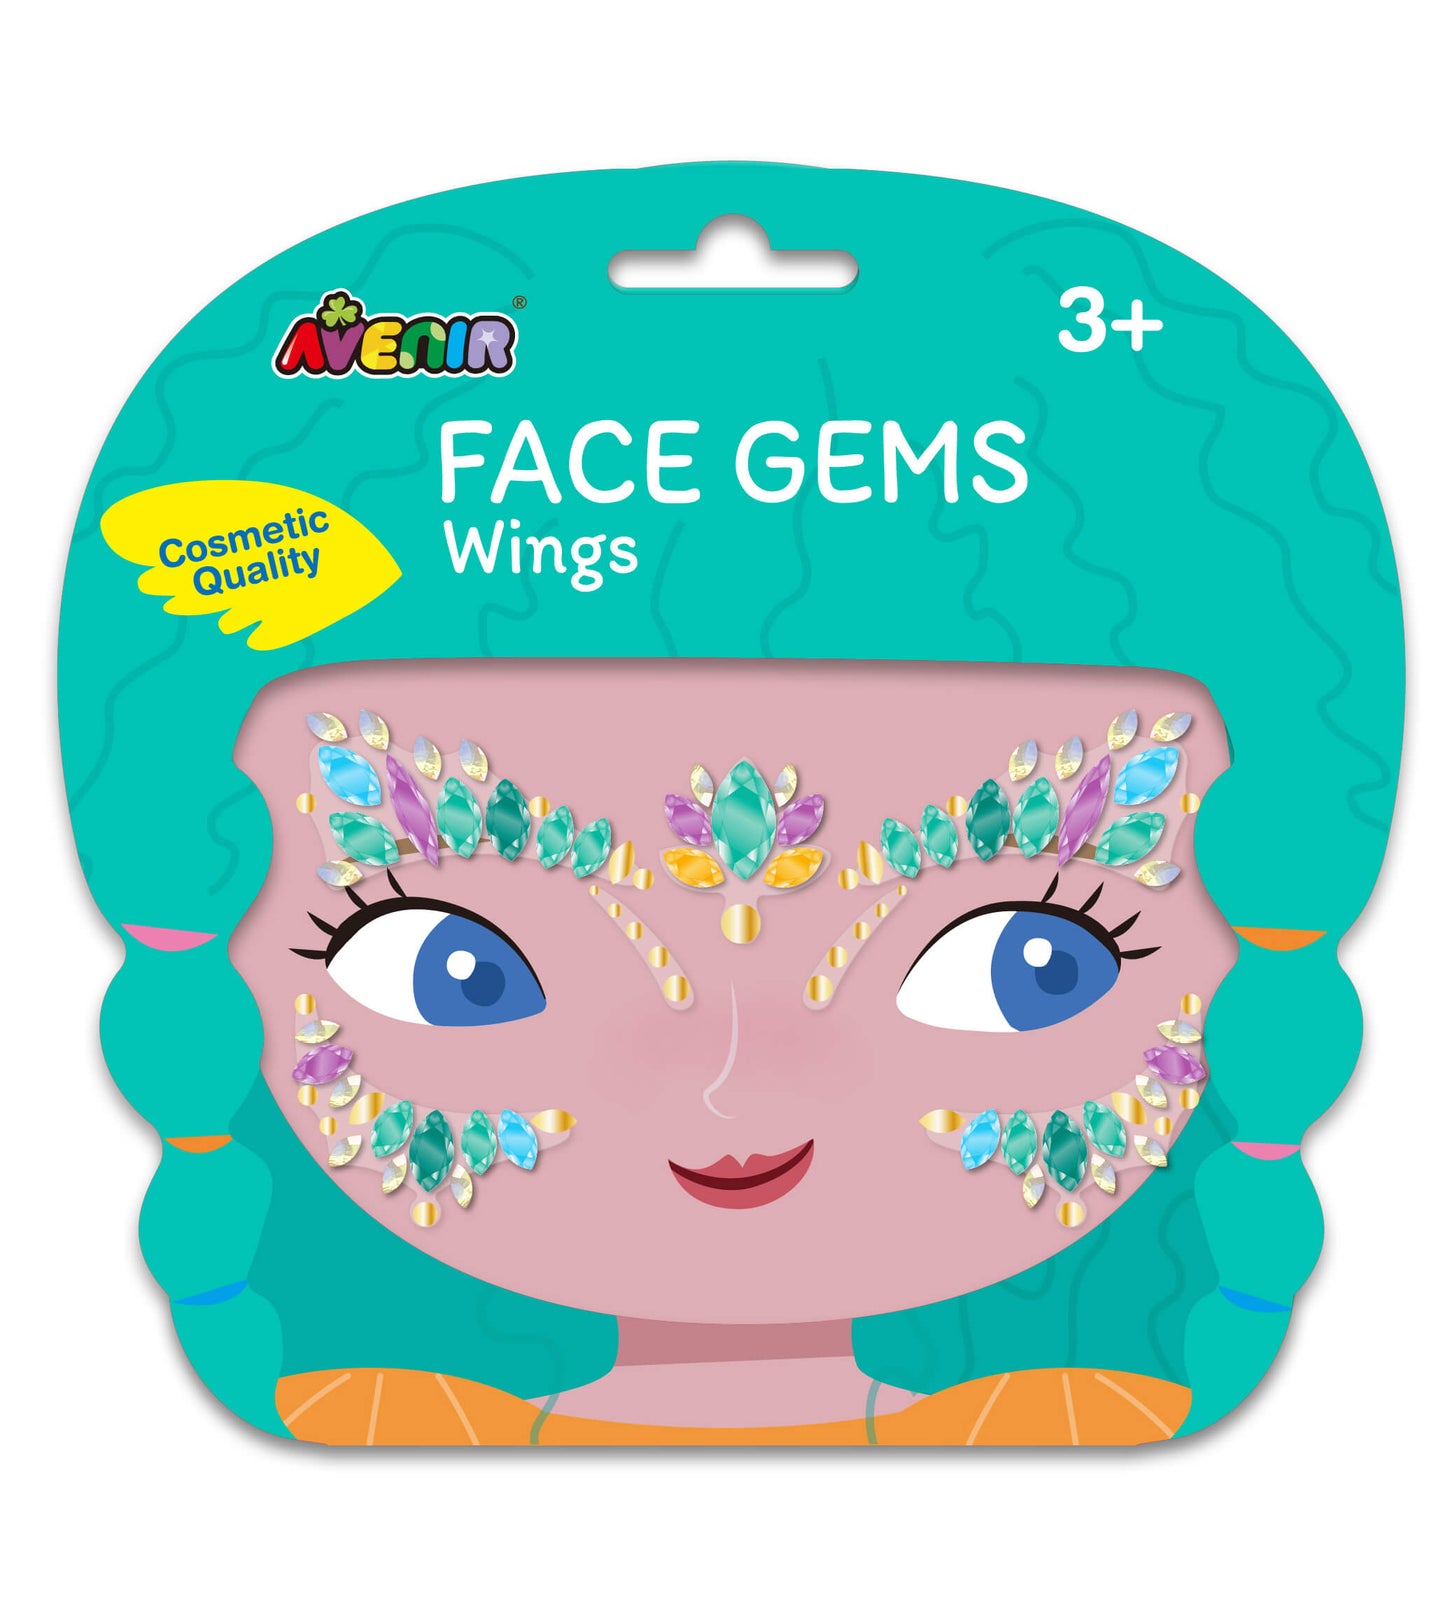 Face Gems Wings